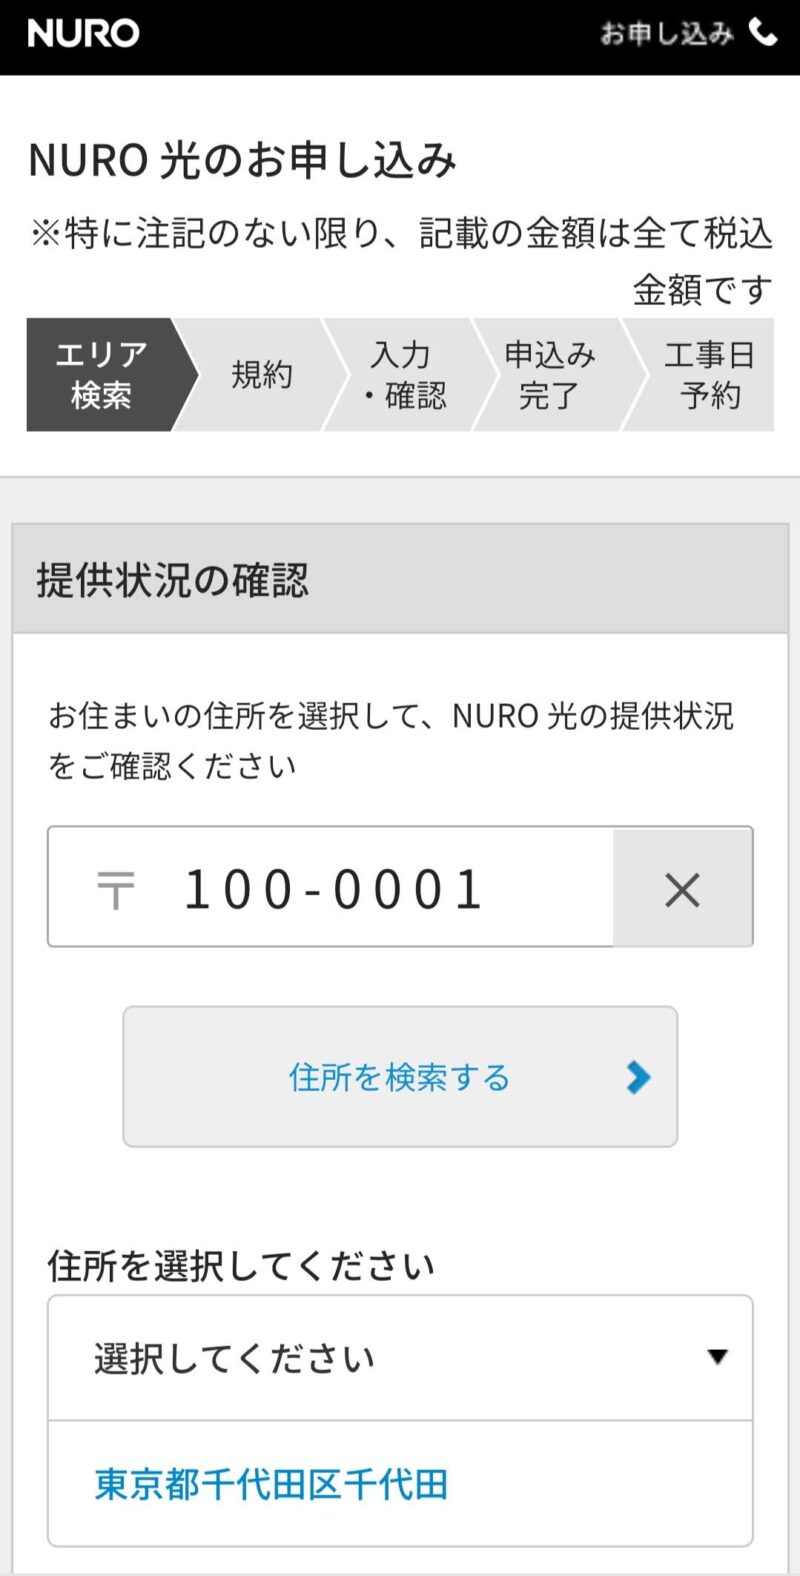 NURO郵便番号検索